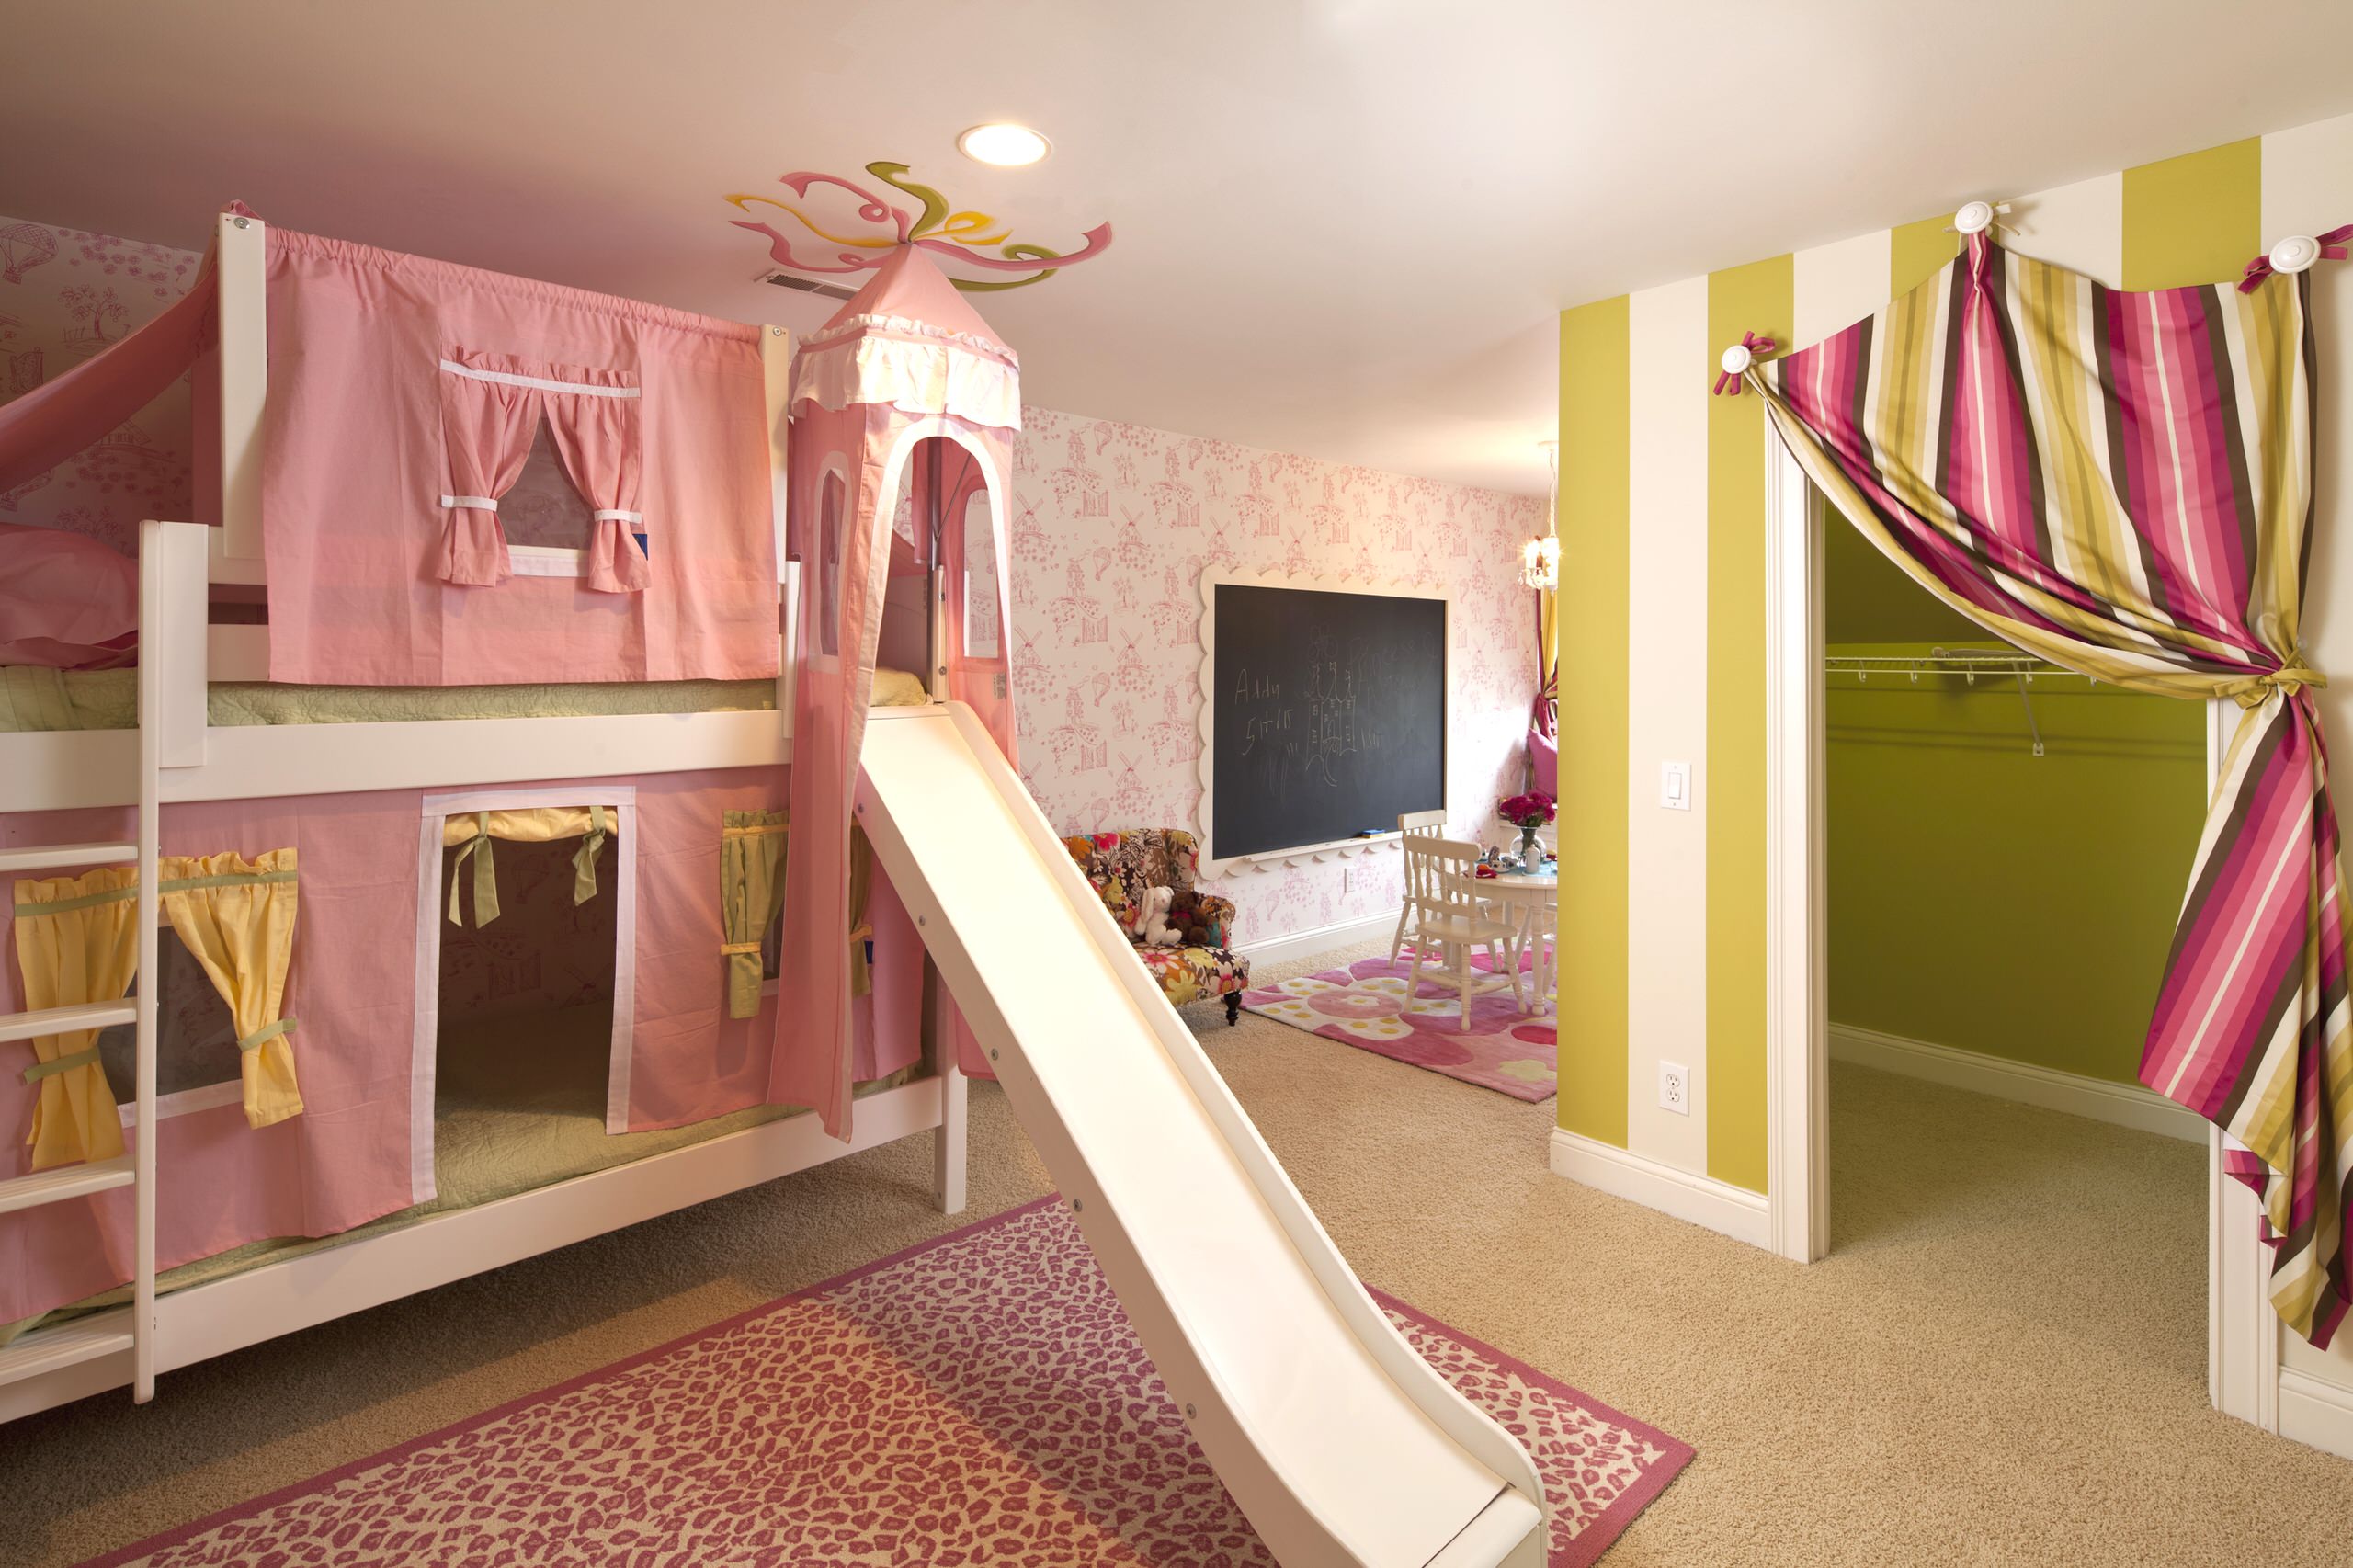 Princess Castle Bunk Bed Houzz, Princess Bunk Beds For Kids